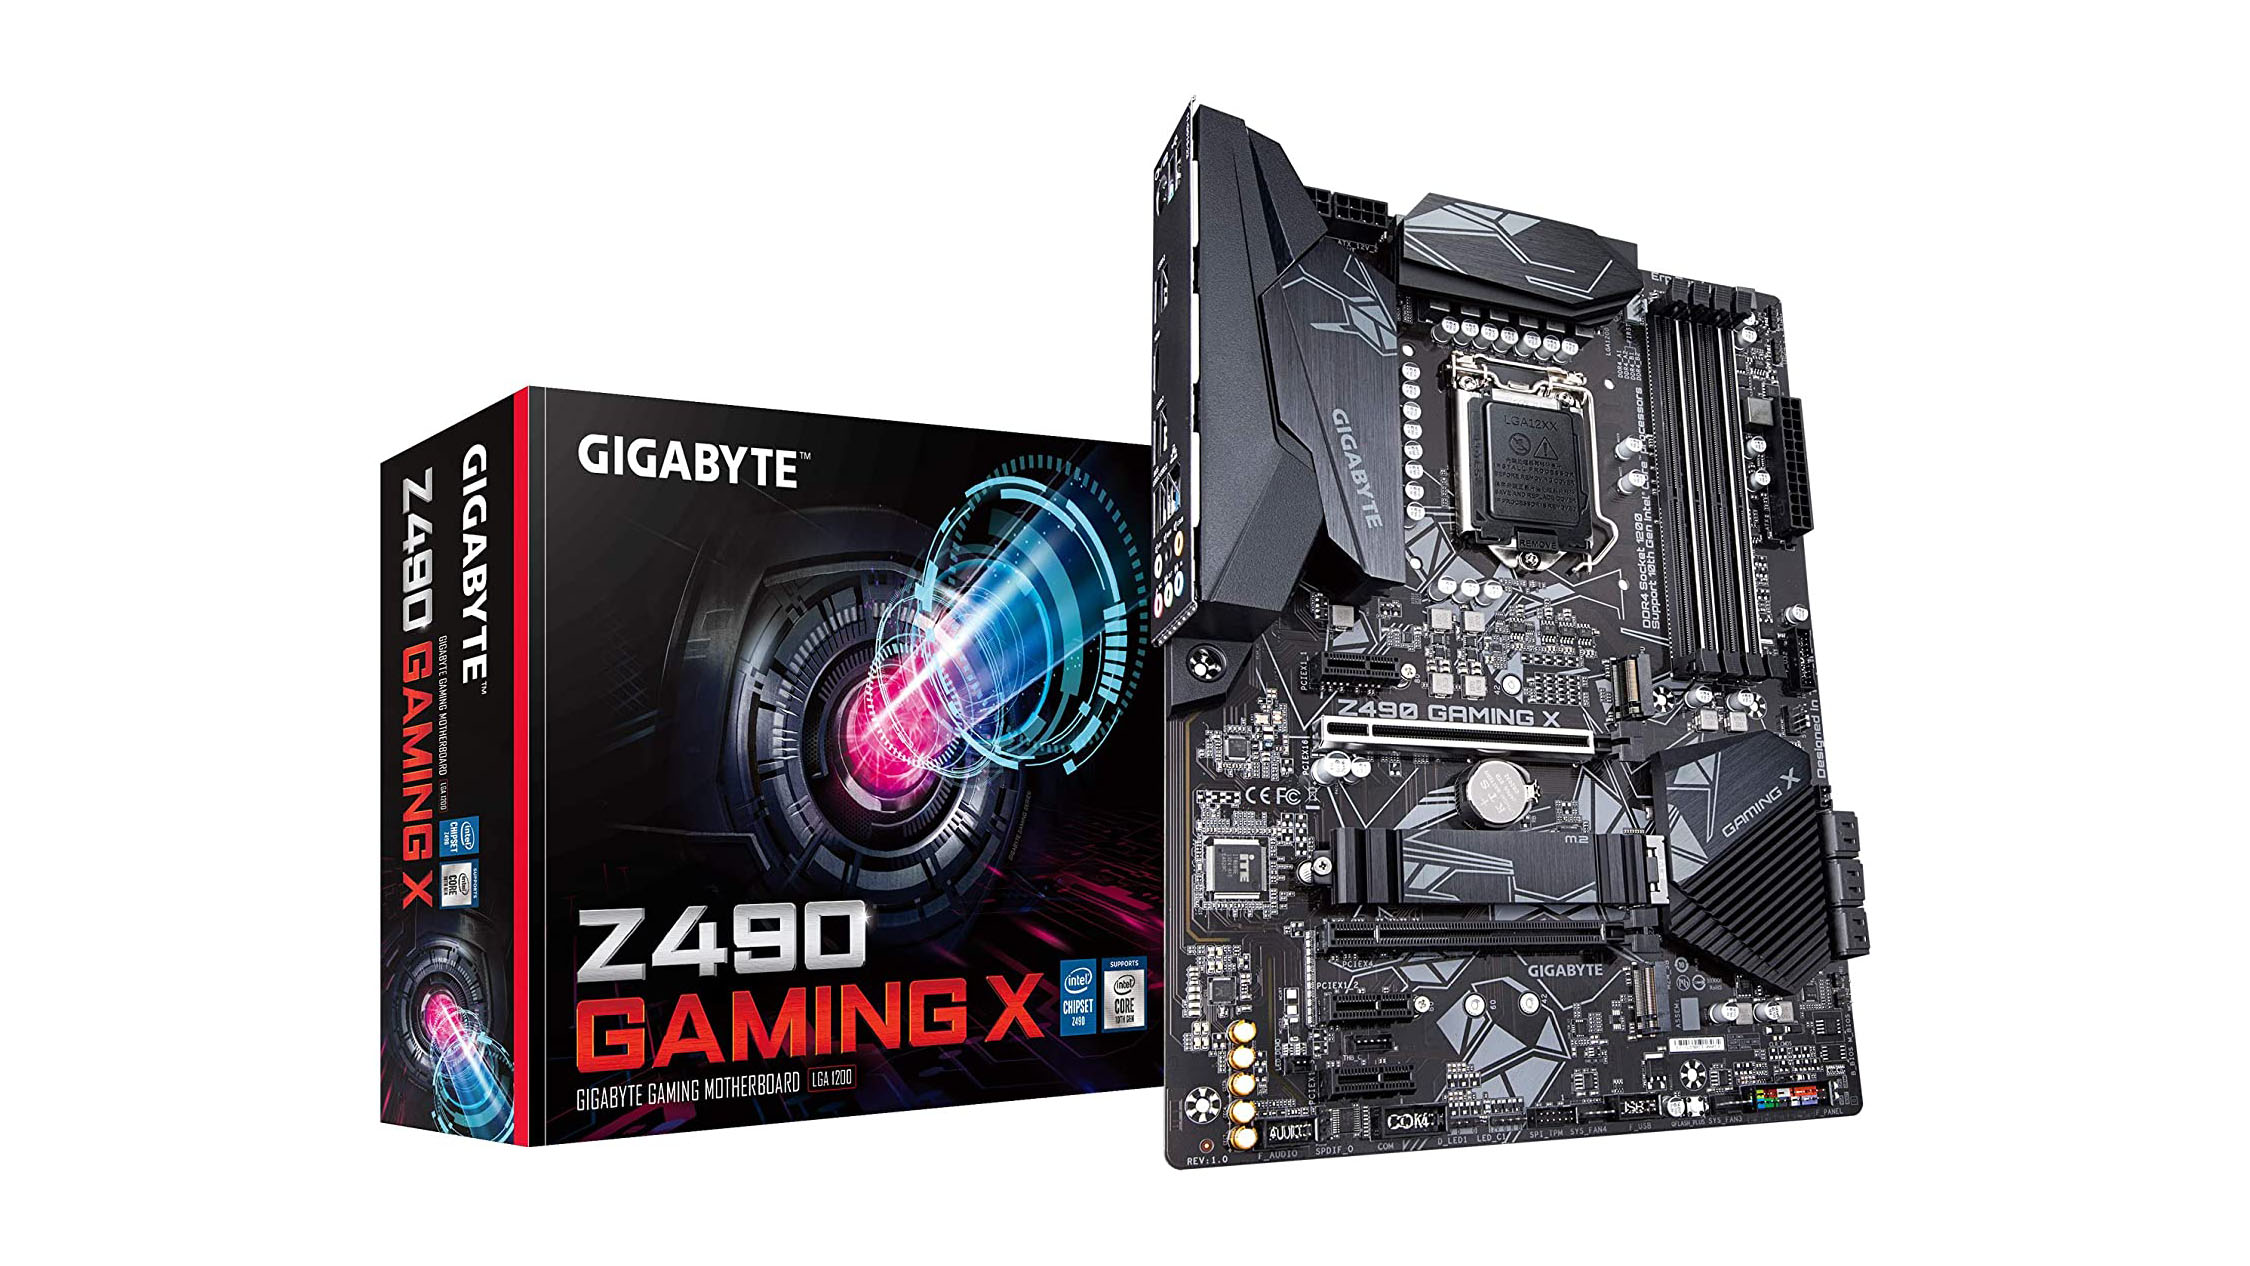 Best motherboards: GIGABYTE Z490 Gaming X